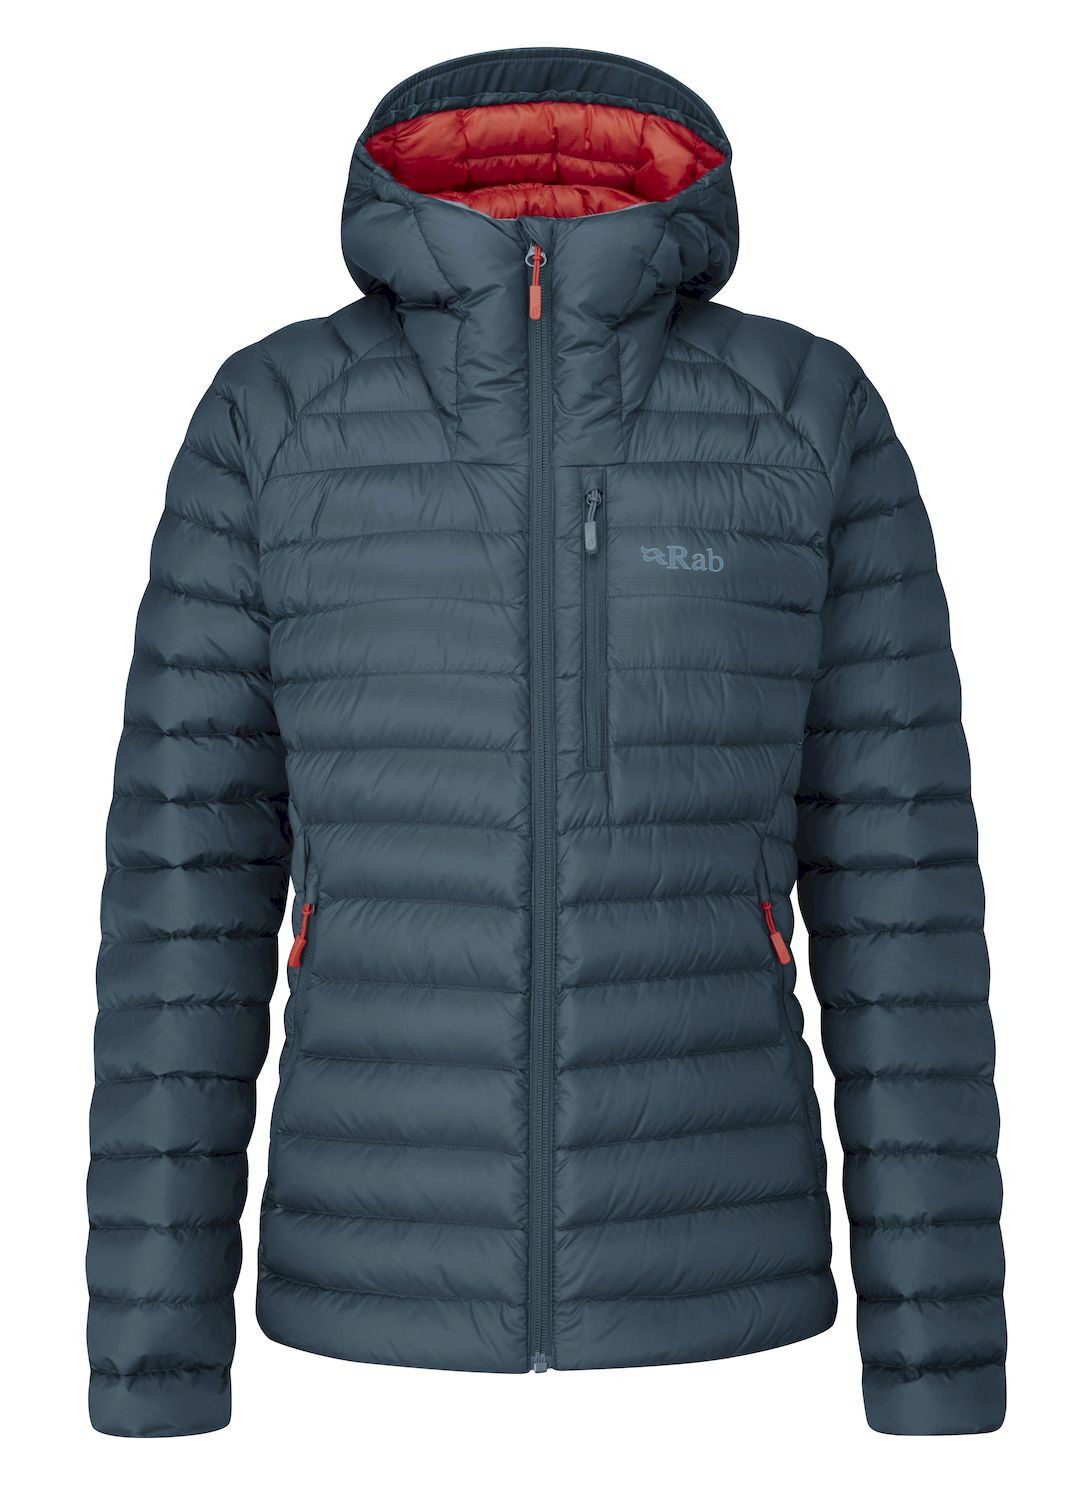 Rab Microlight Alpine Jacket  - Giacca in piumino - Donna